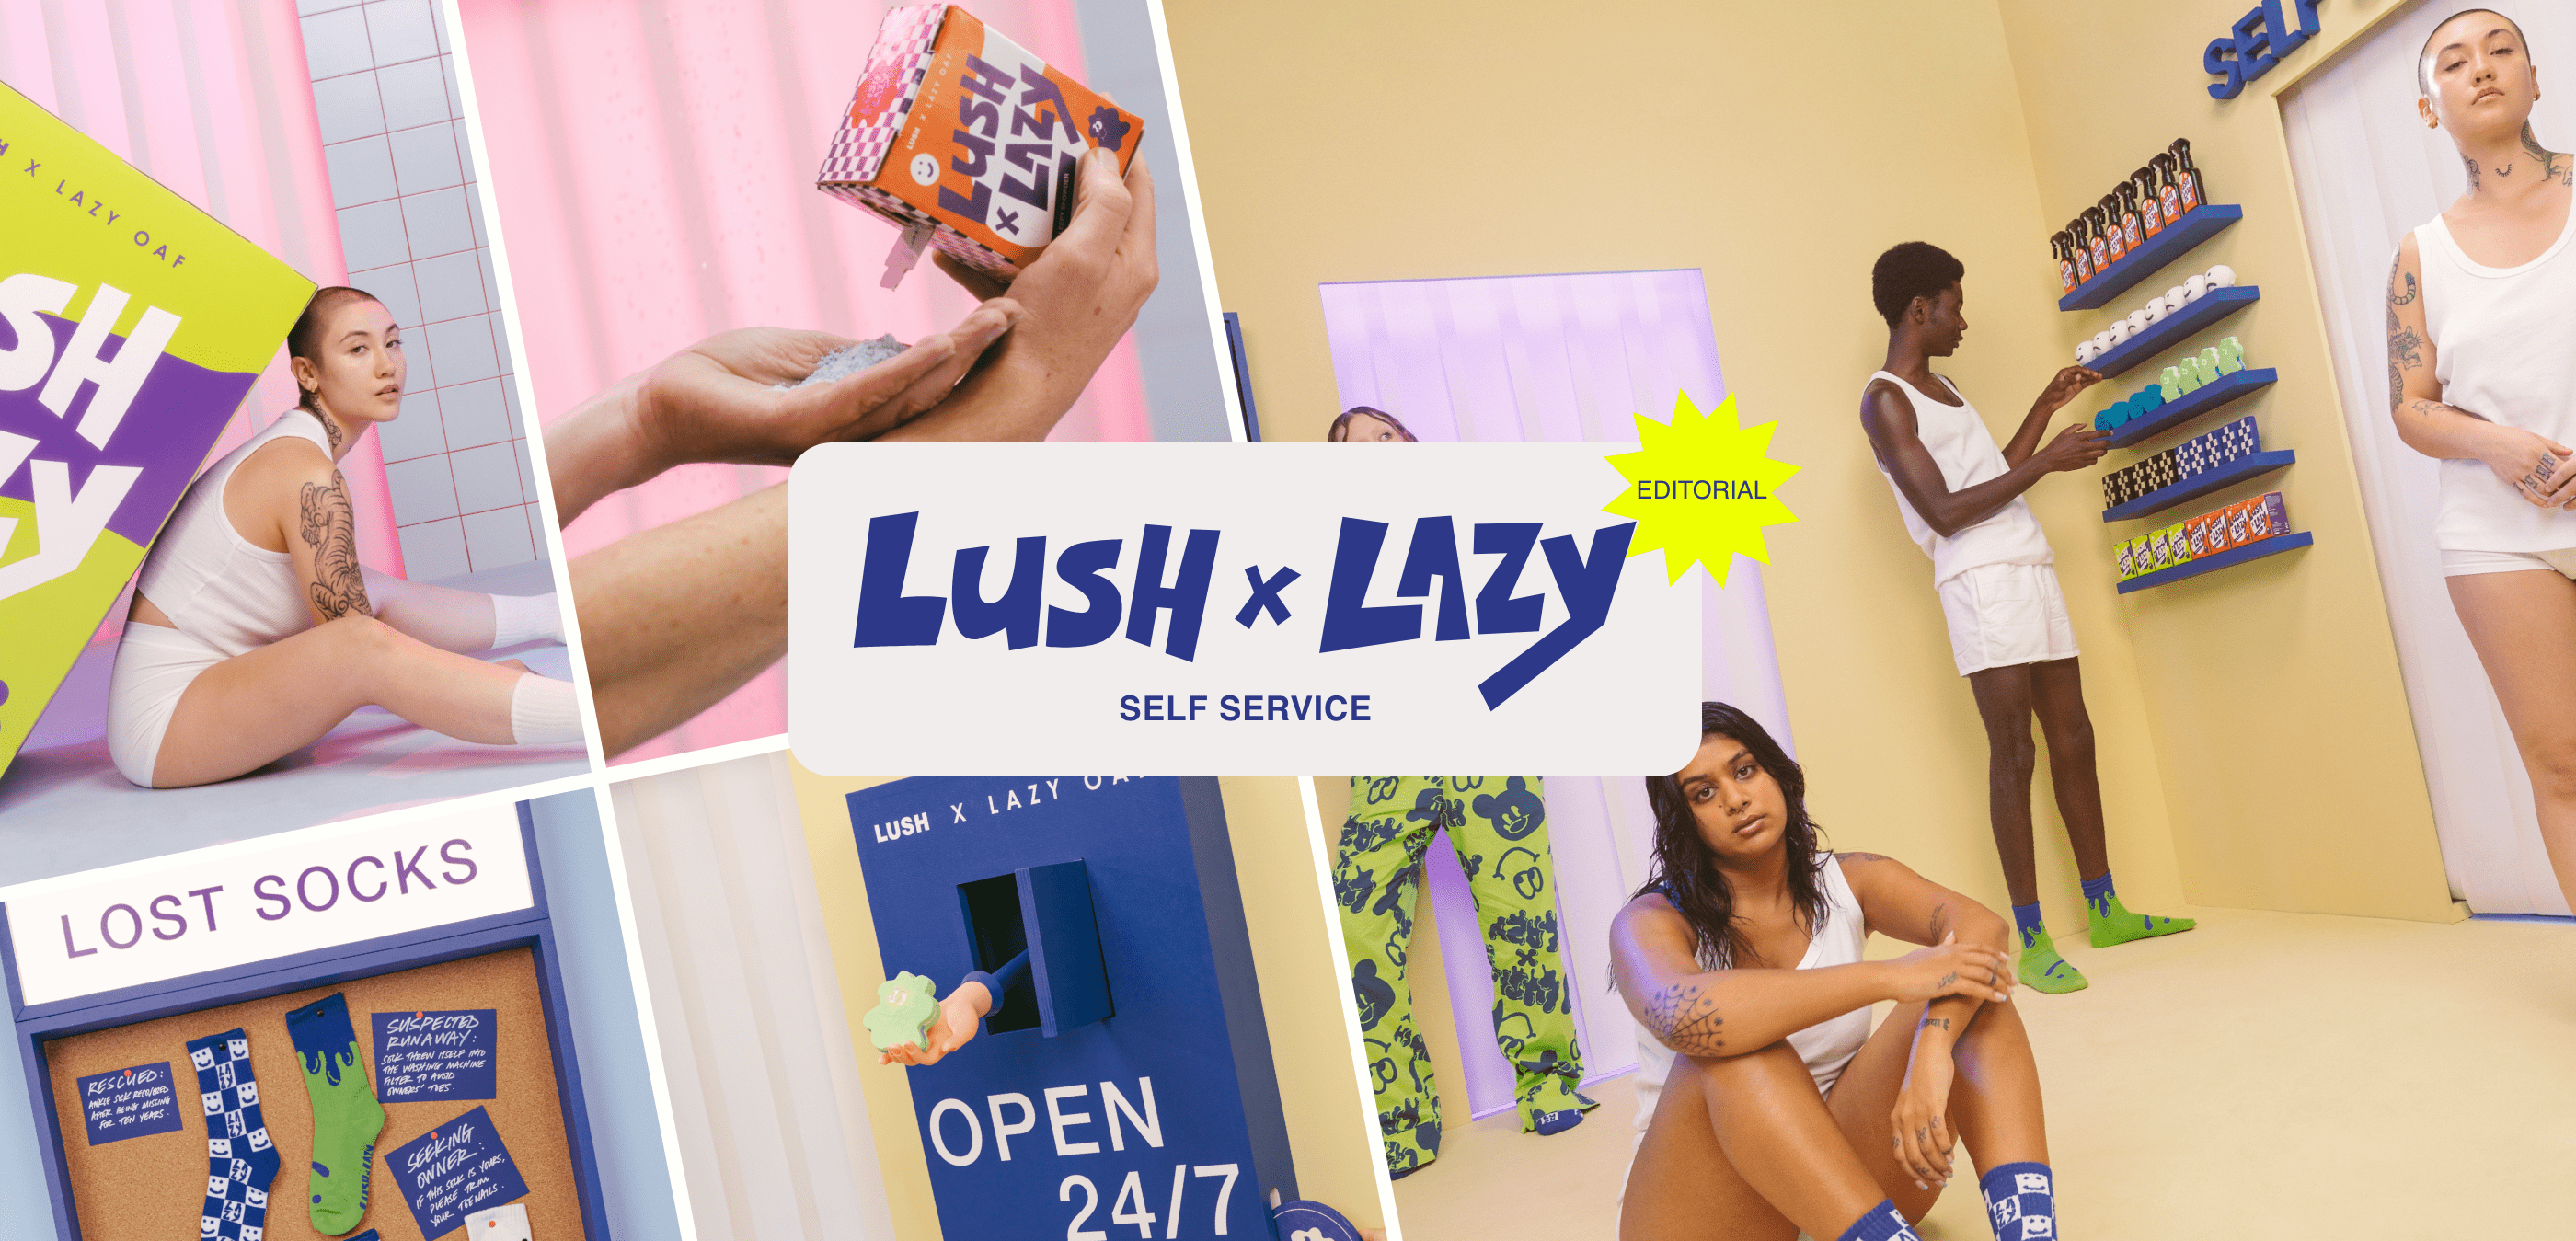 LUSH X LAZY SELF SERVICE: EDITORIAL